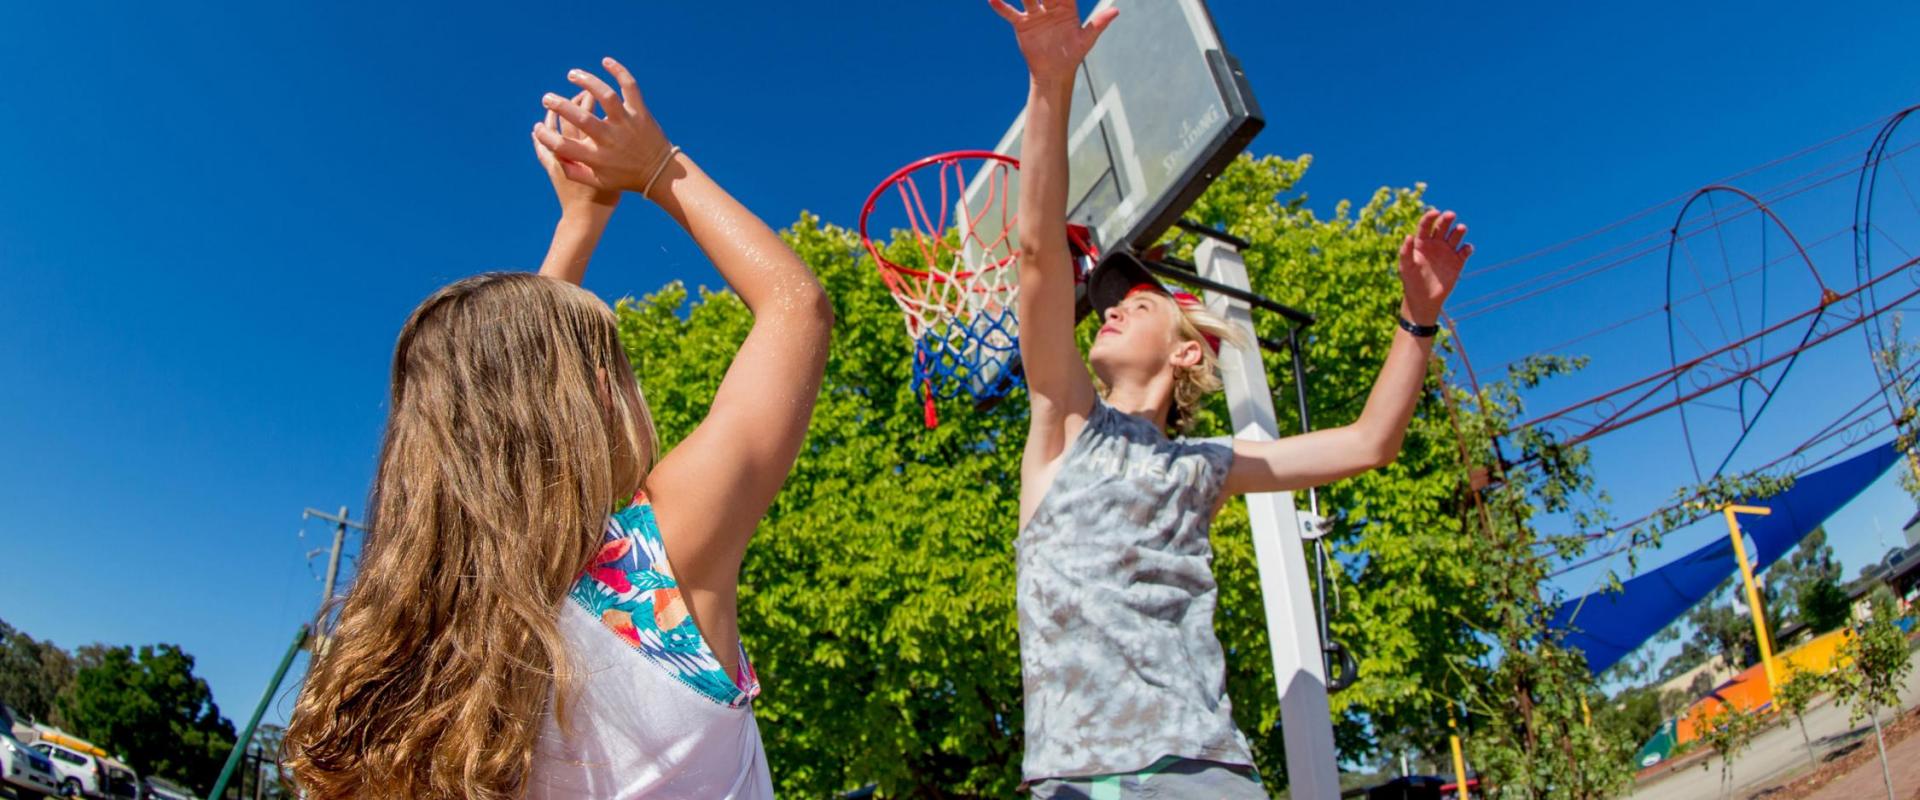 BIG4 Bendigo Park Lane Holiday Park - Parky's Wonderland - Kids playing basketball